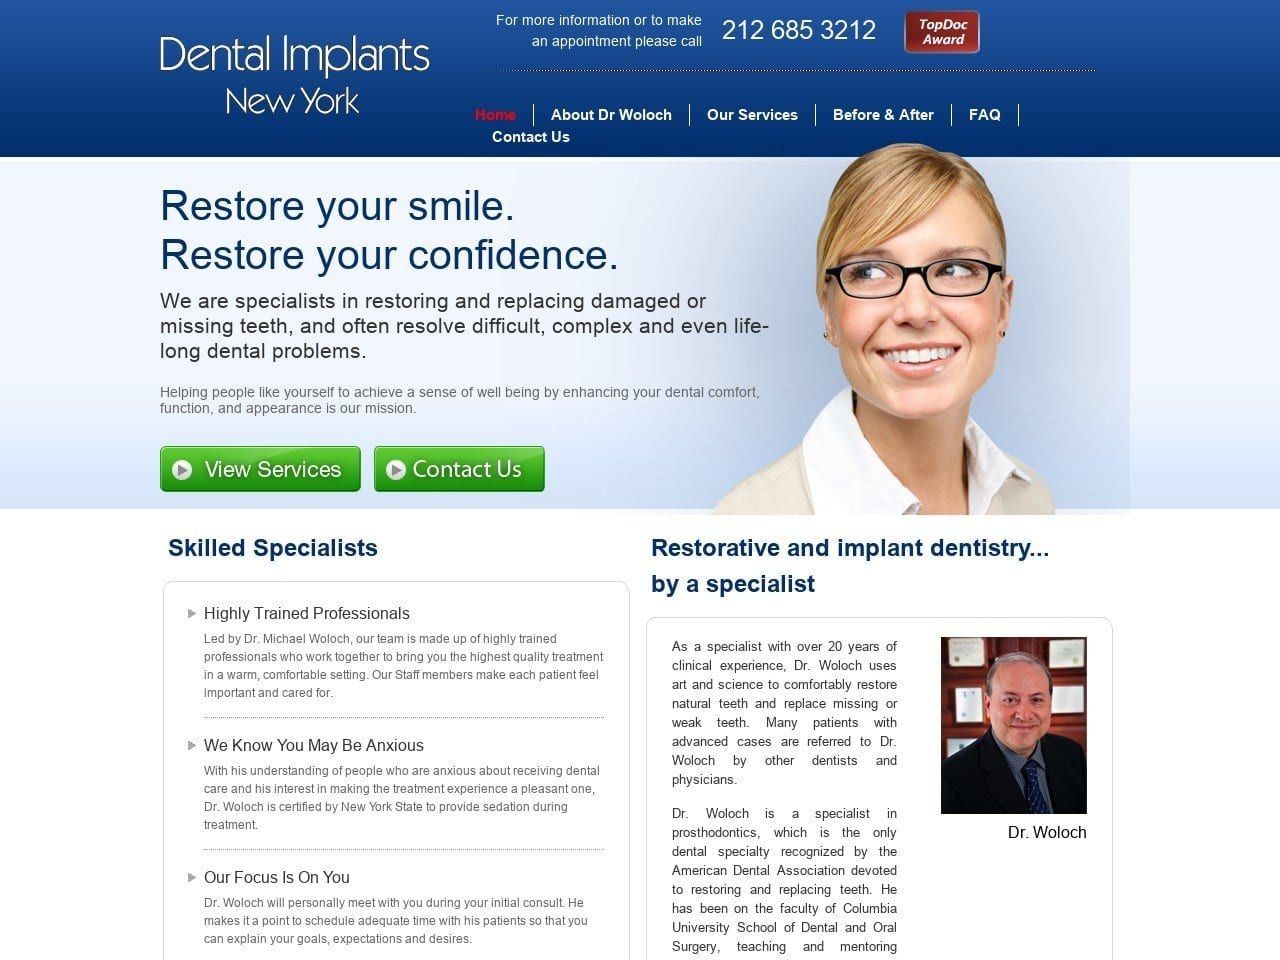 Dental Implants New York Website Screenshot from dentalimplantsny.com